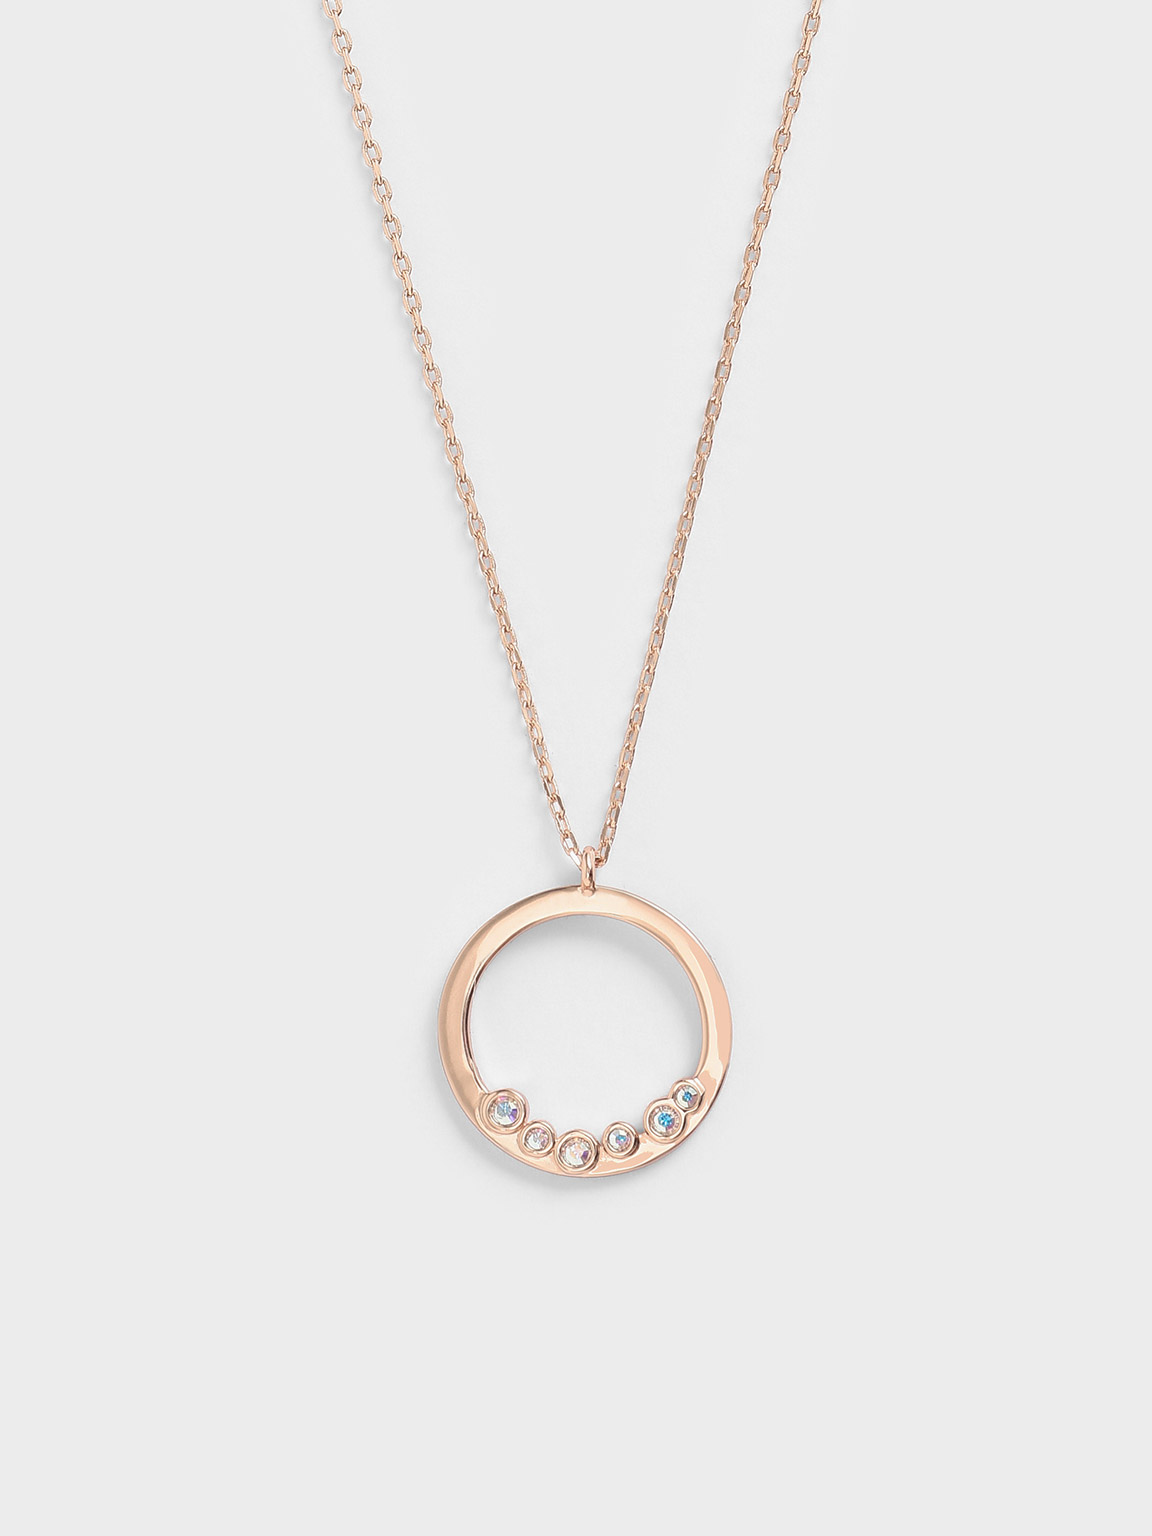 Swarovski(r) Crystal Studded Pendant Necklace